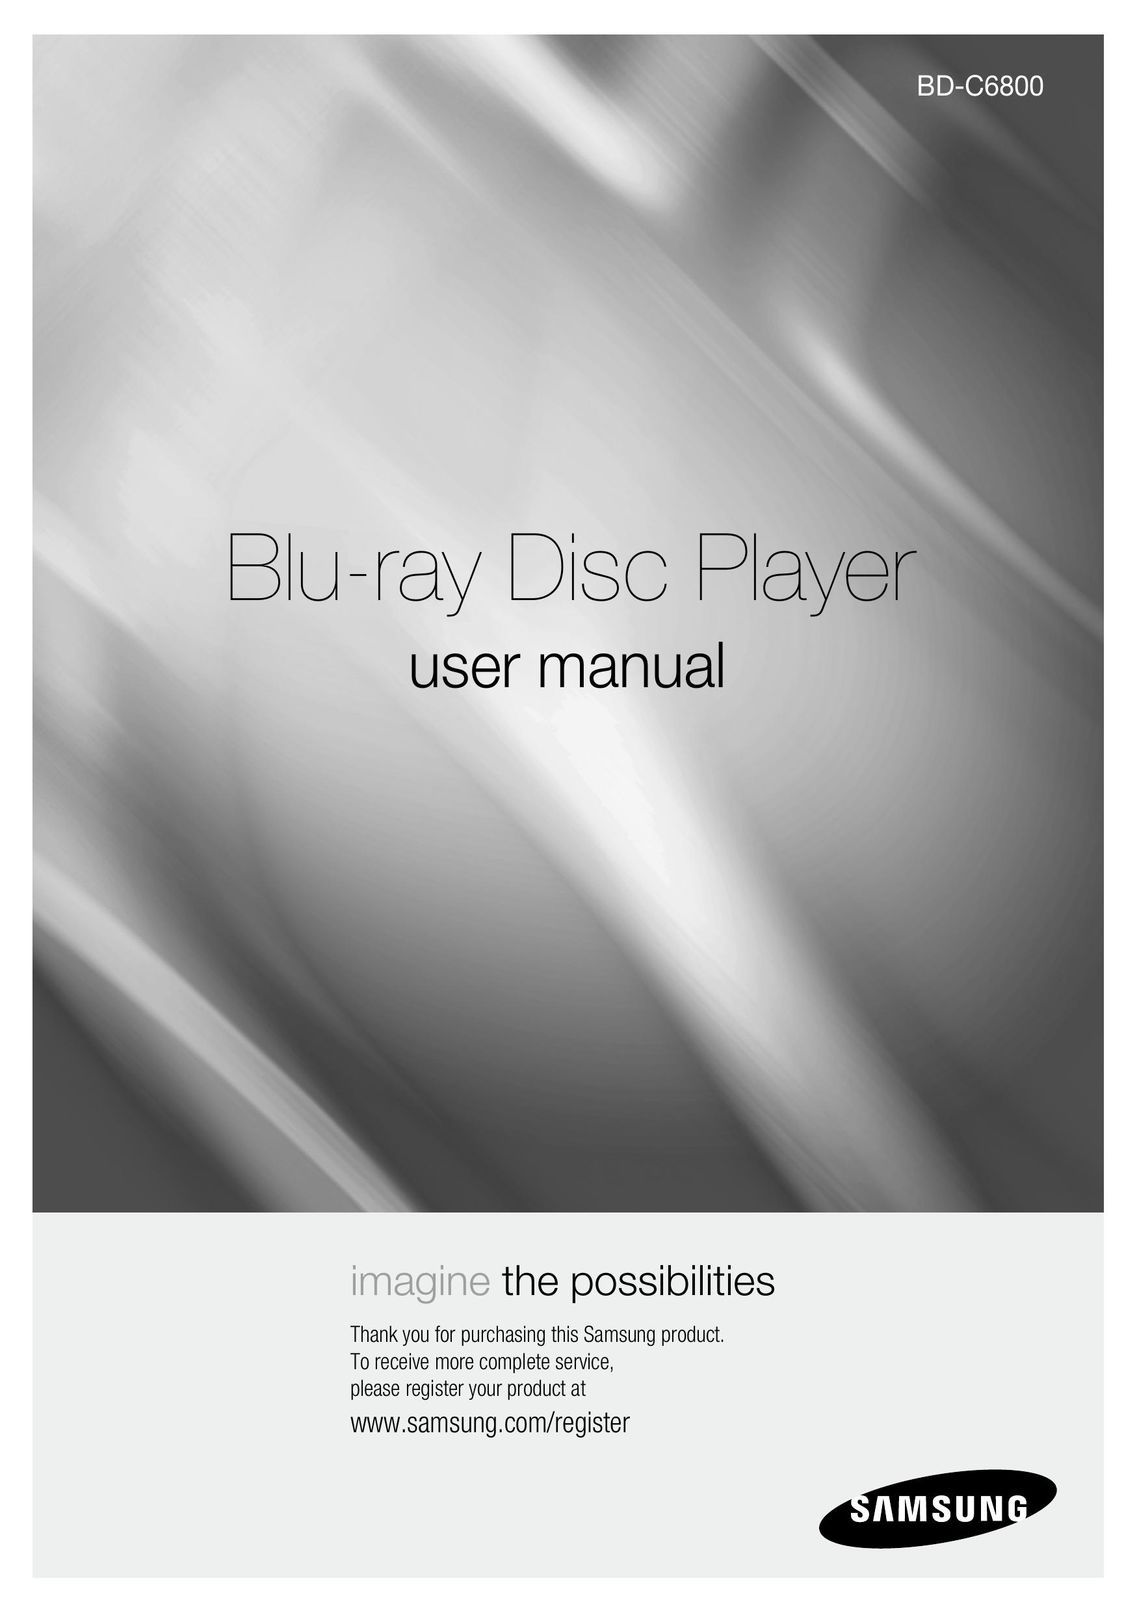 Samsung BD-C6800 Blu-ray Player User Manual